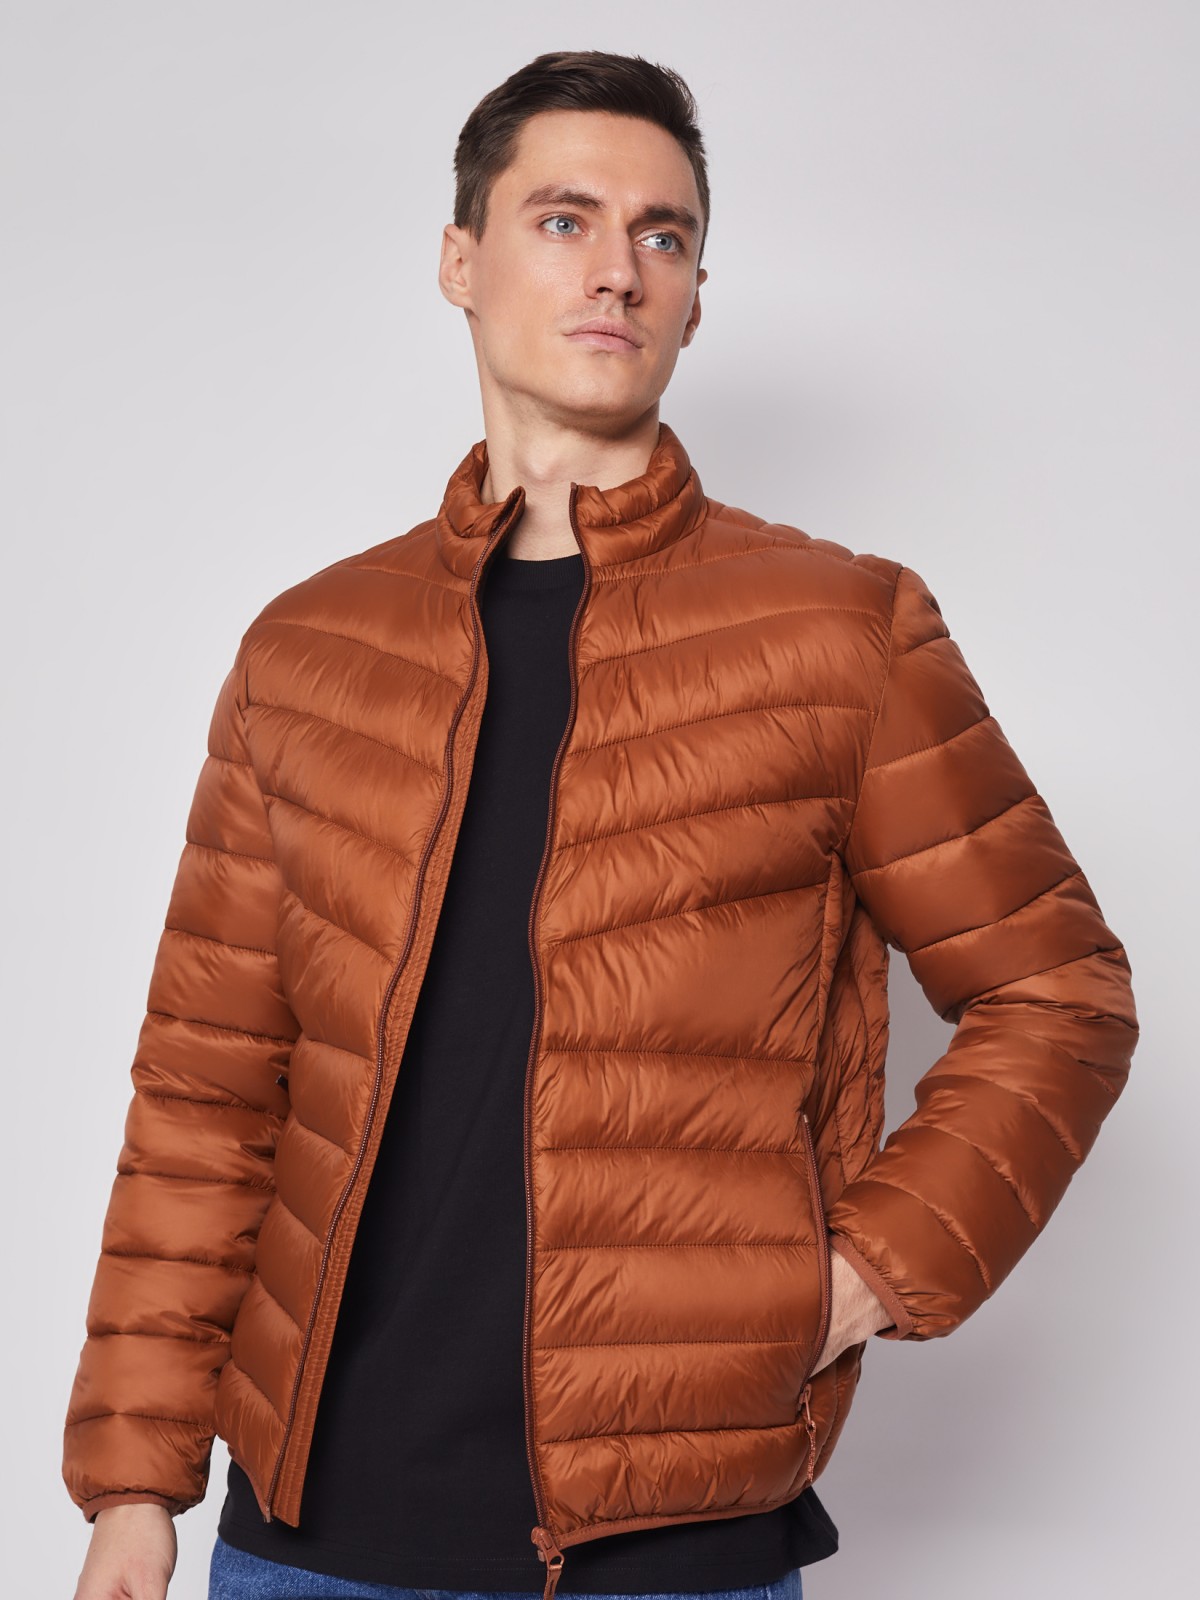 Утеплённая куртка с воротником zolla 012125102144, цвет терракота, размер S - фото 3